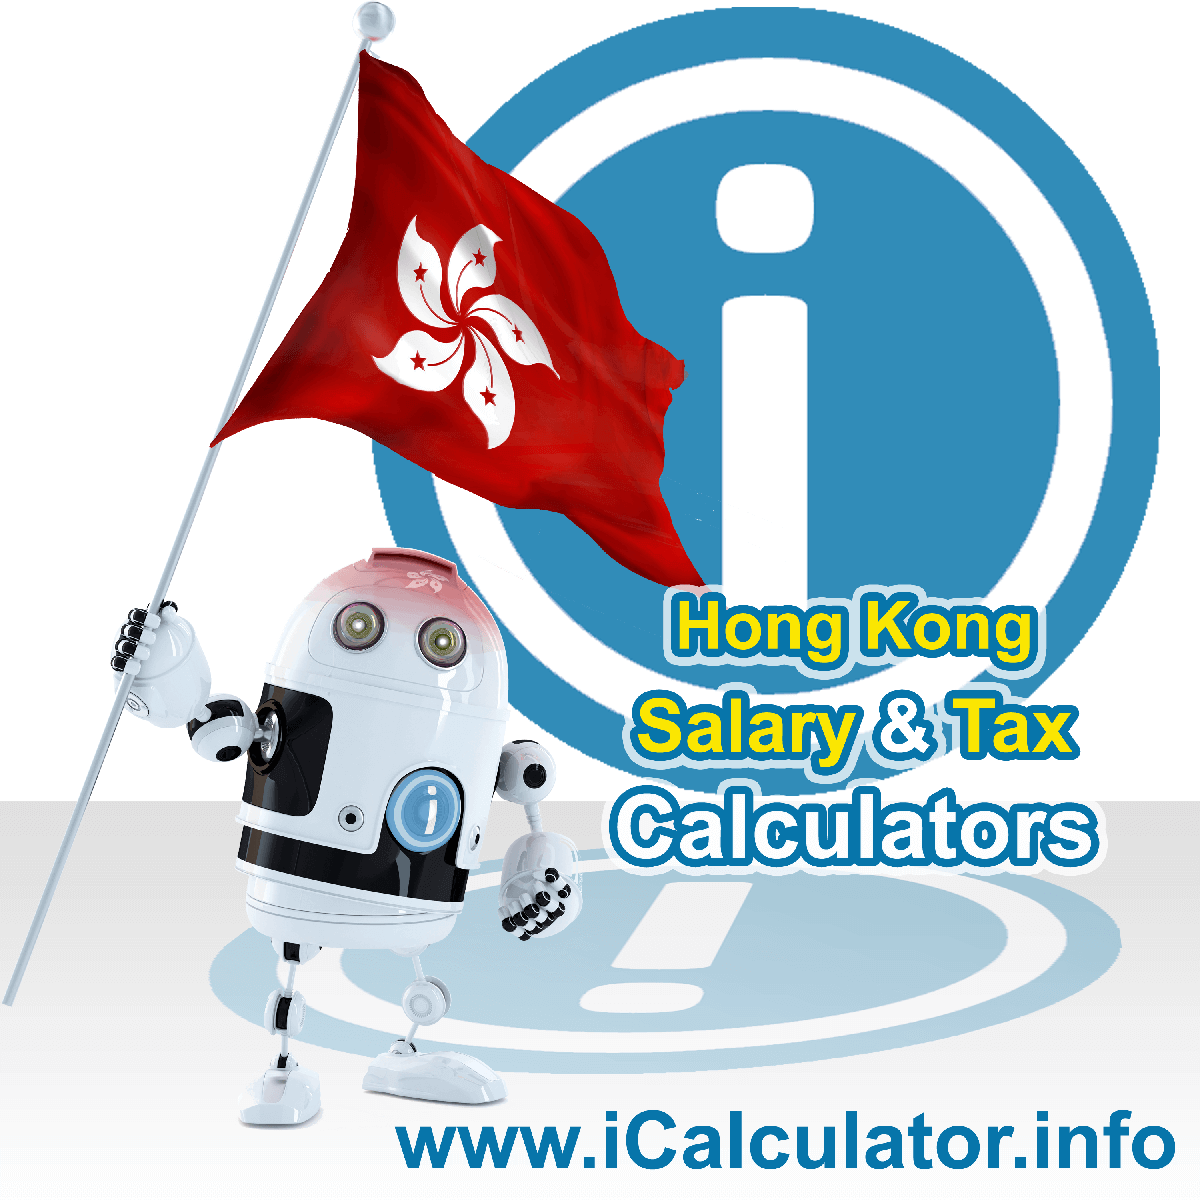 Hong Kong Salary Calculator. This image shows the Hong Kongese flag and information relating to the tax formula for the Hong Kong Tax Calculator